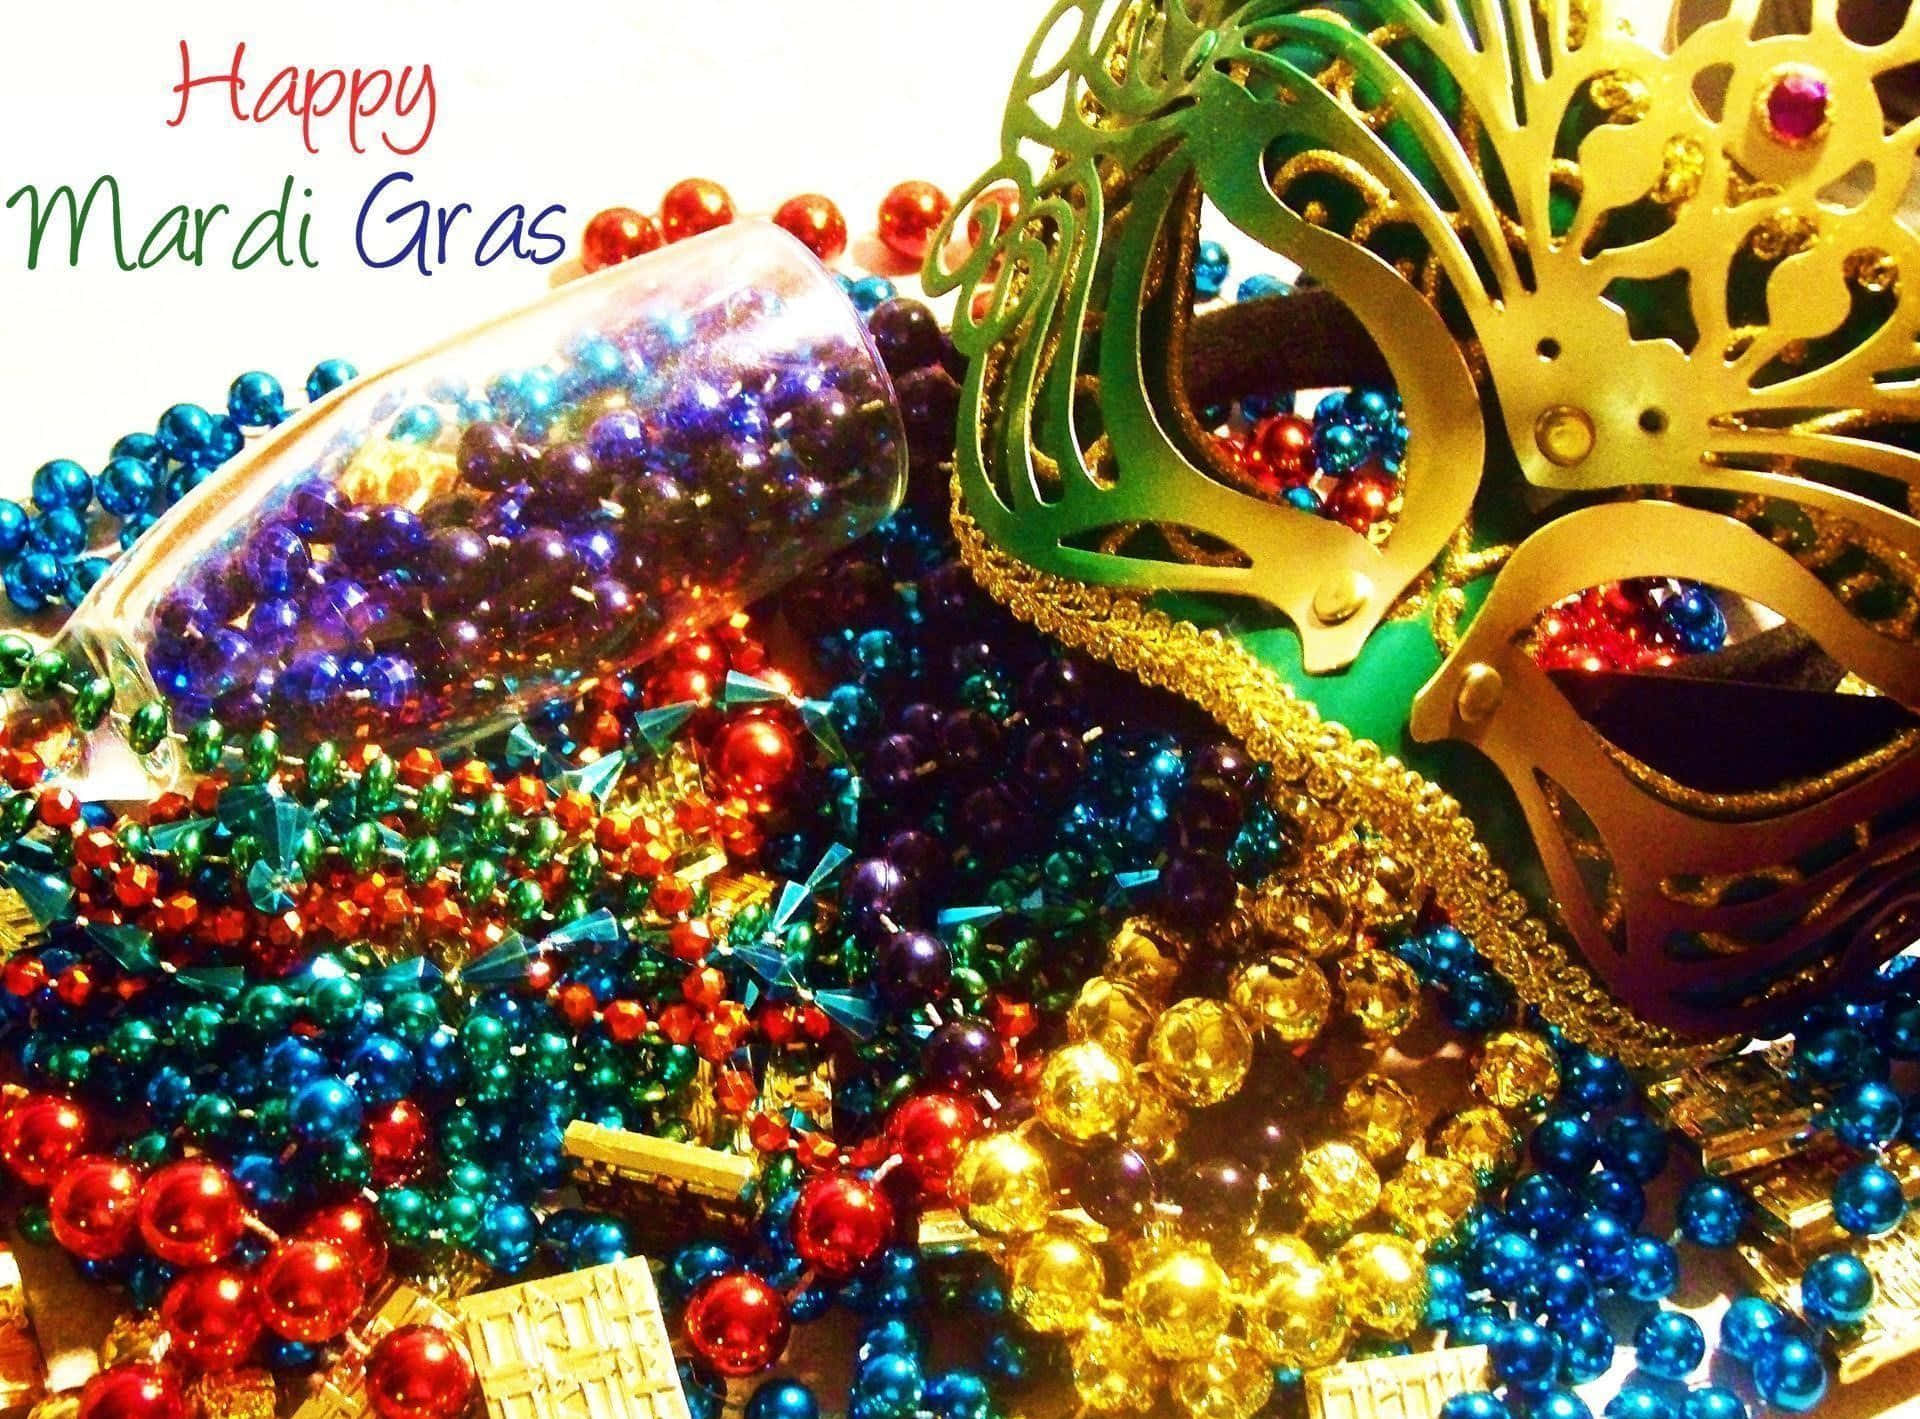 Celebrate Mardi Gras with a splash of color.